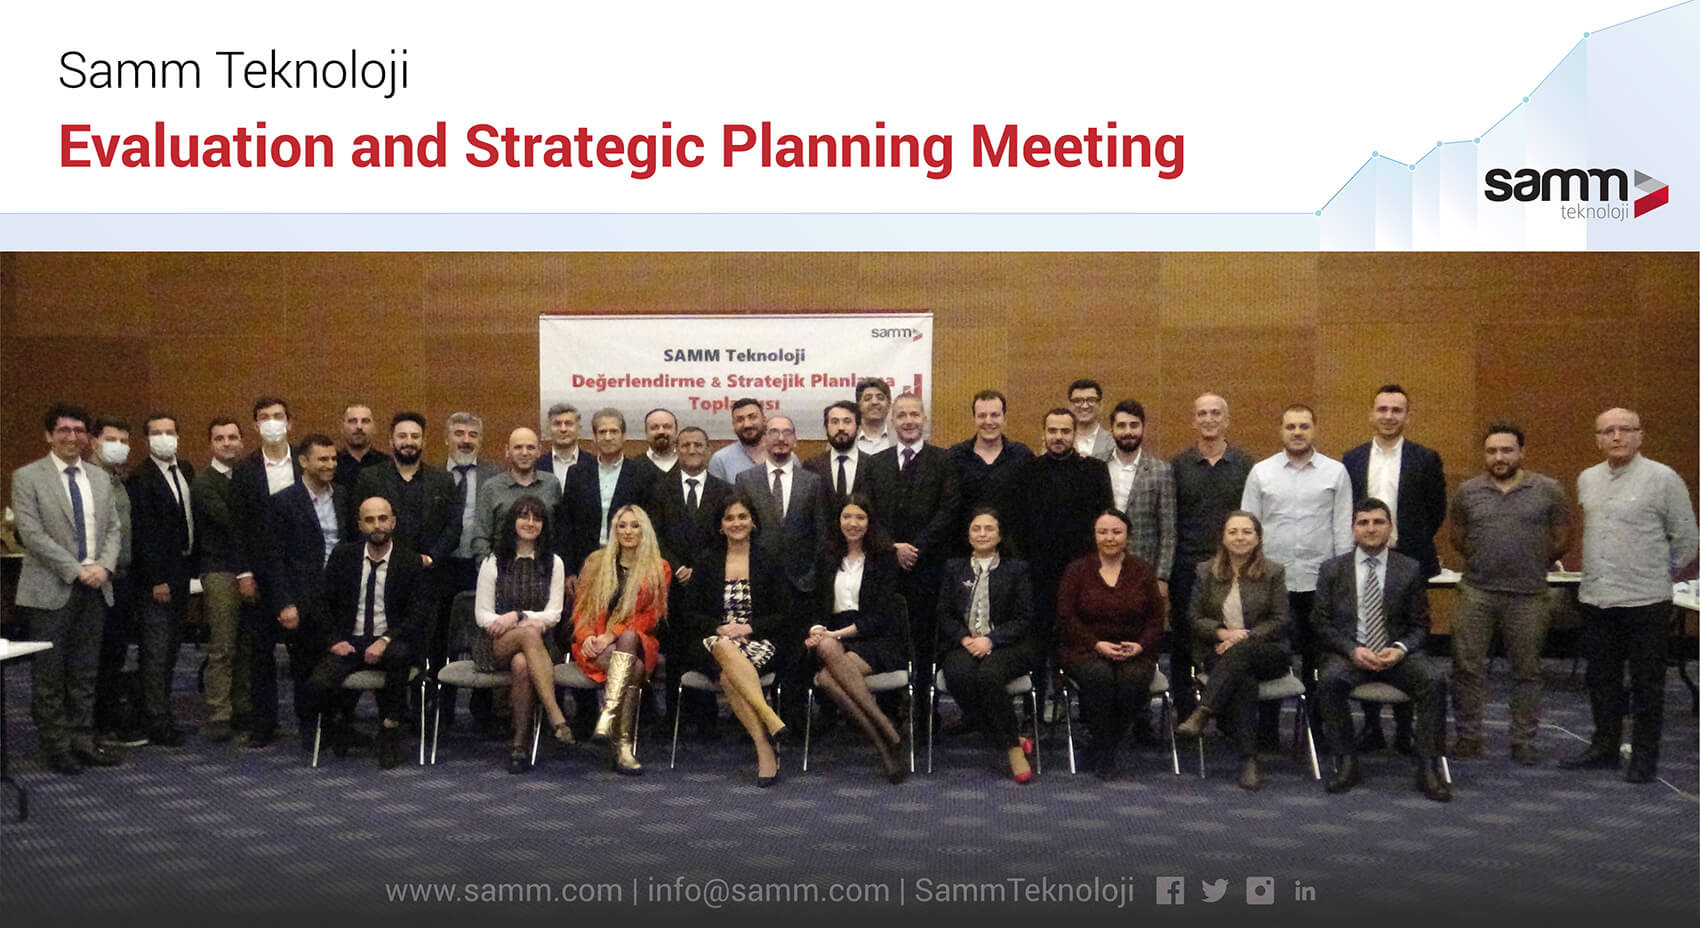 Samm Teknoloji, Evaluation and Strategic Planning Meeting